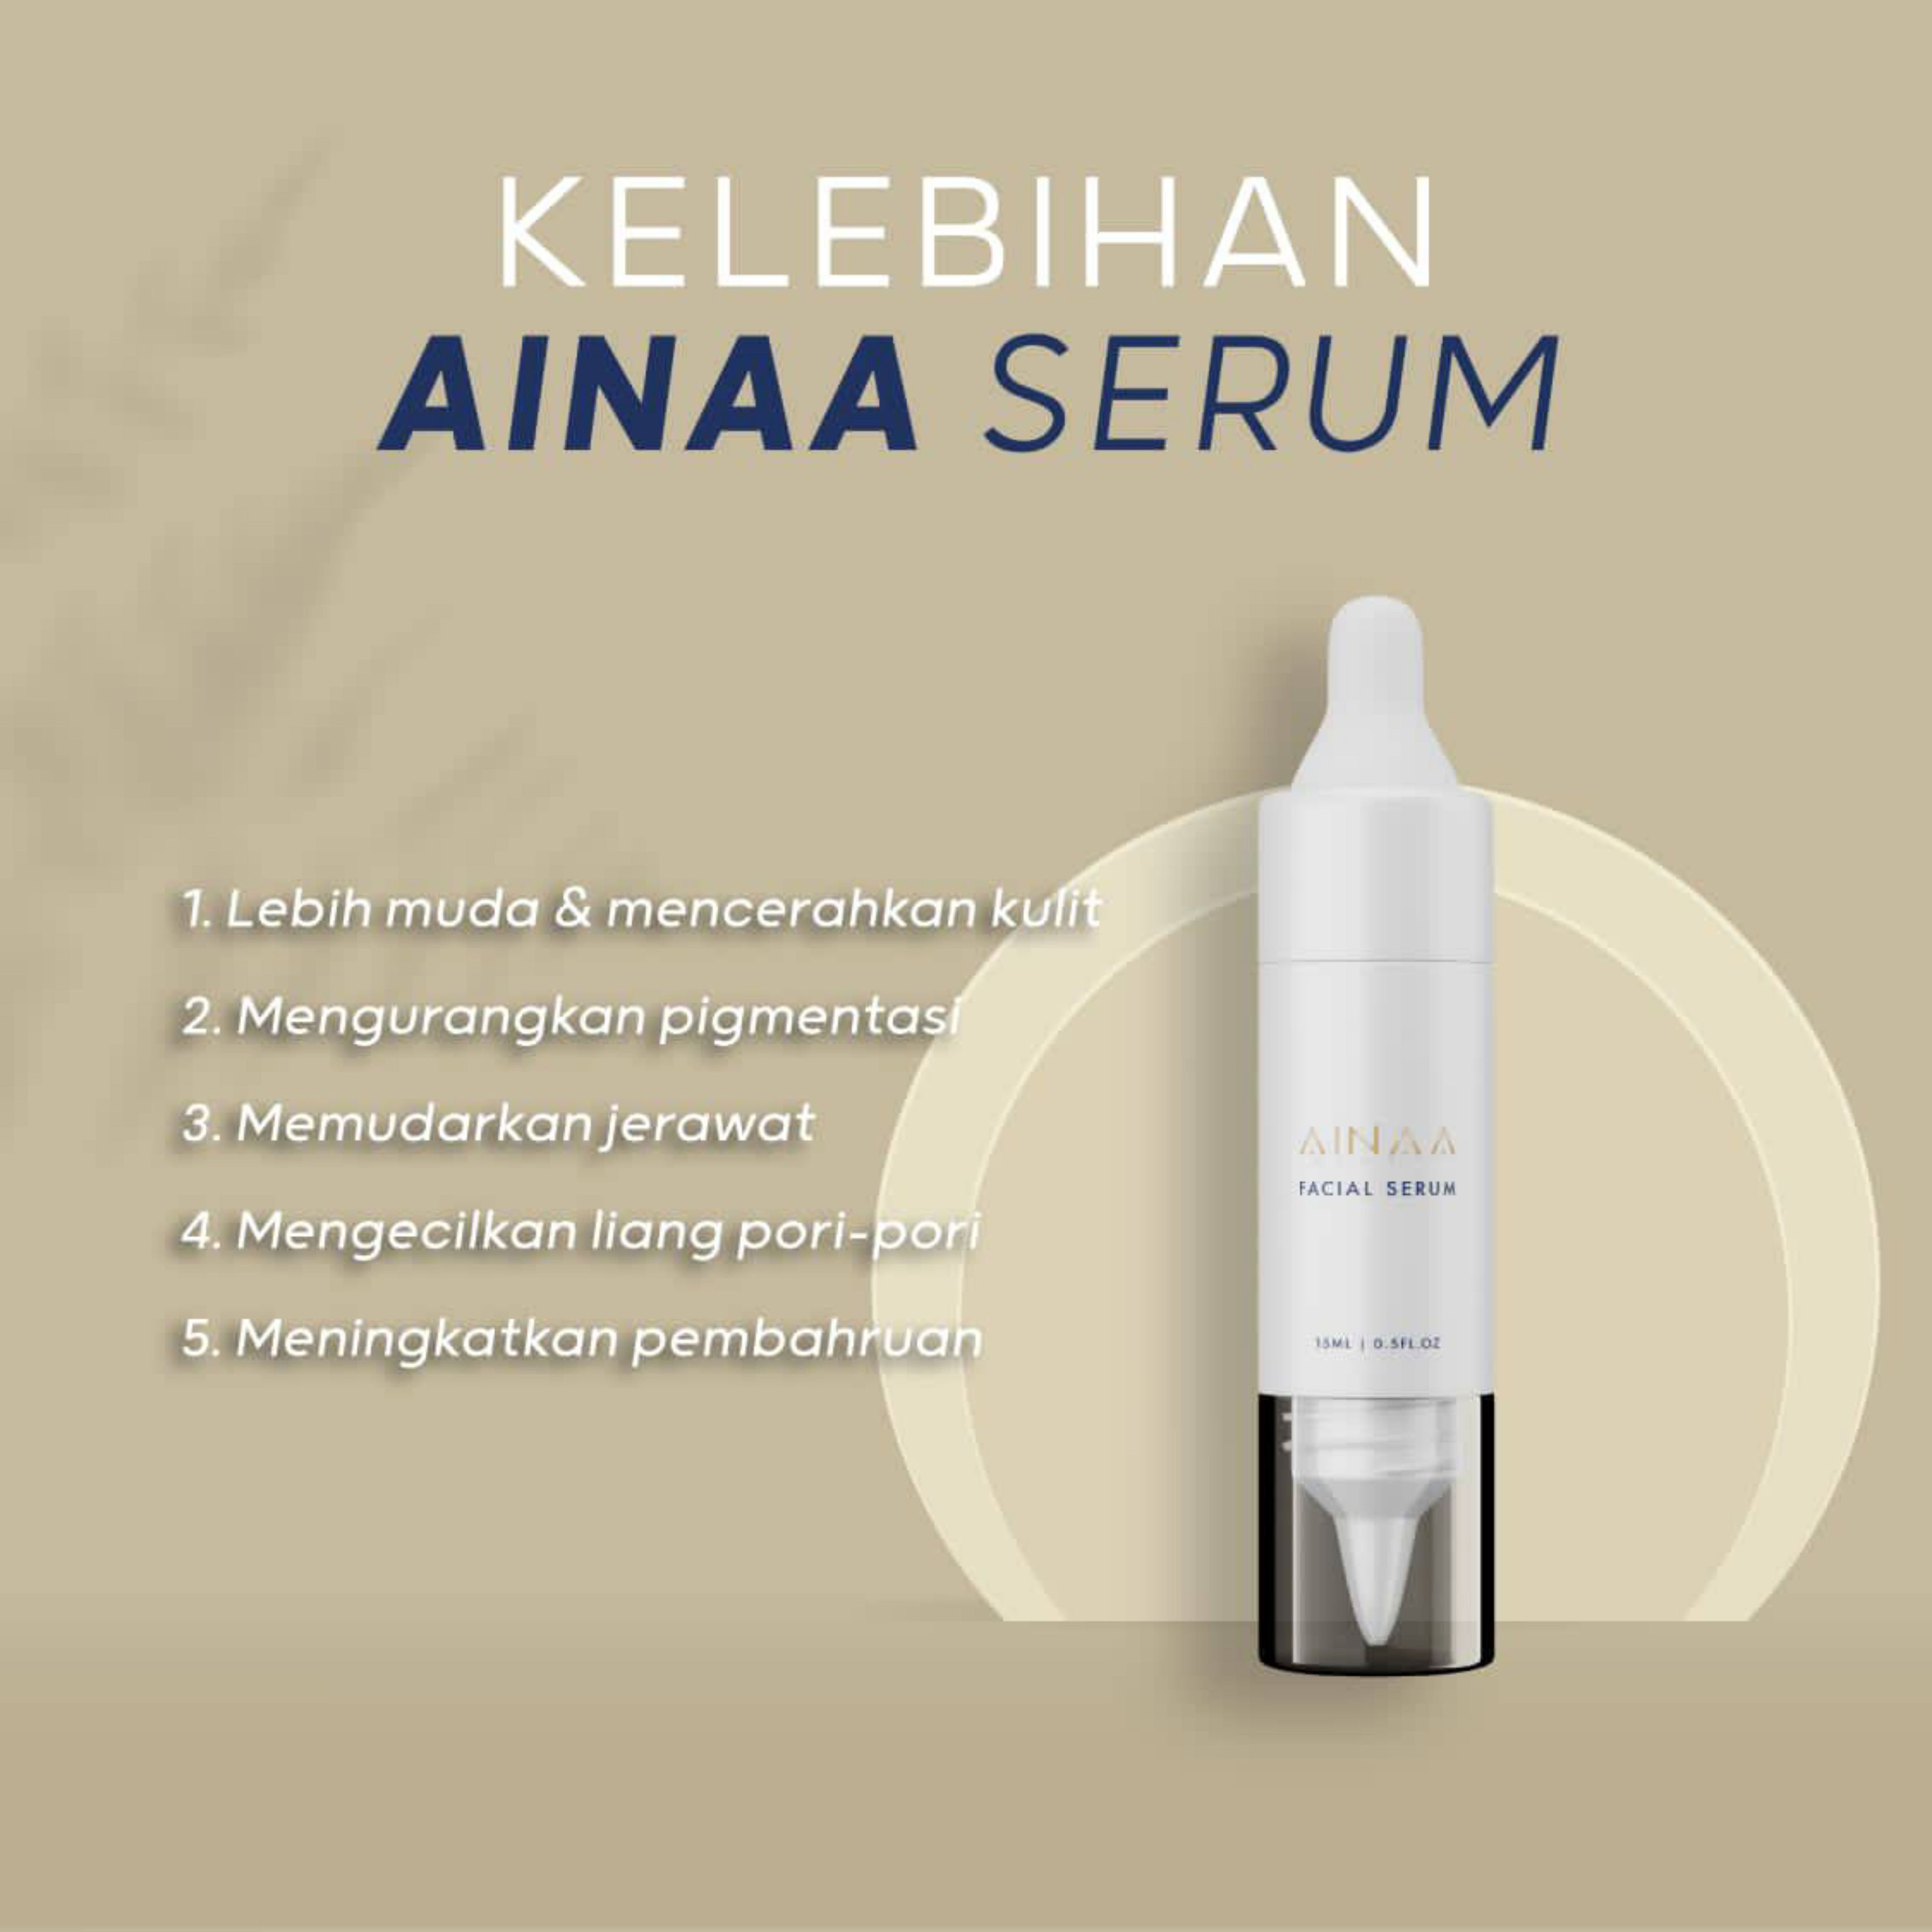 AINAA Beauty Set | Cleanser Scrub Serum Sunscreen Moisturizer